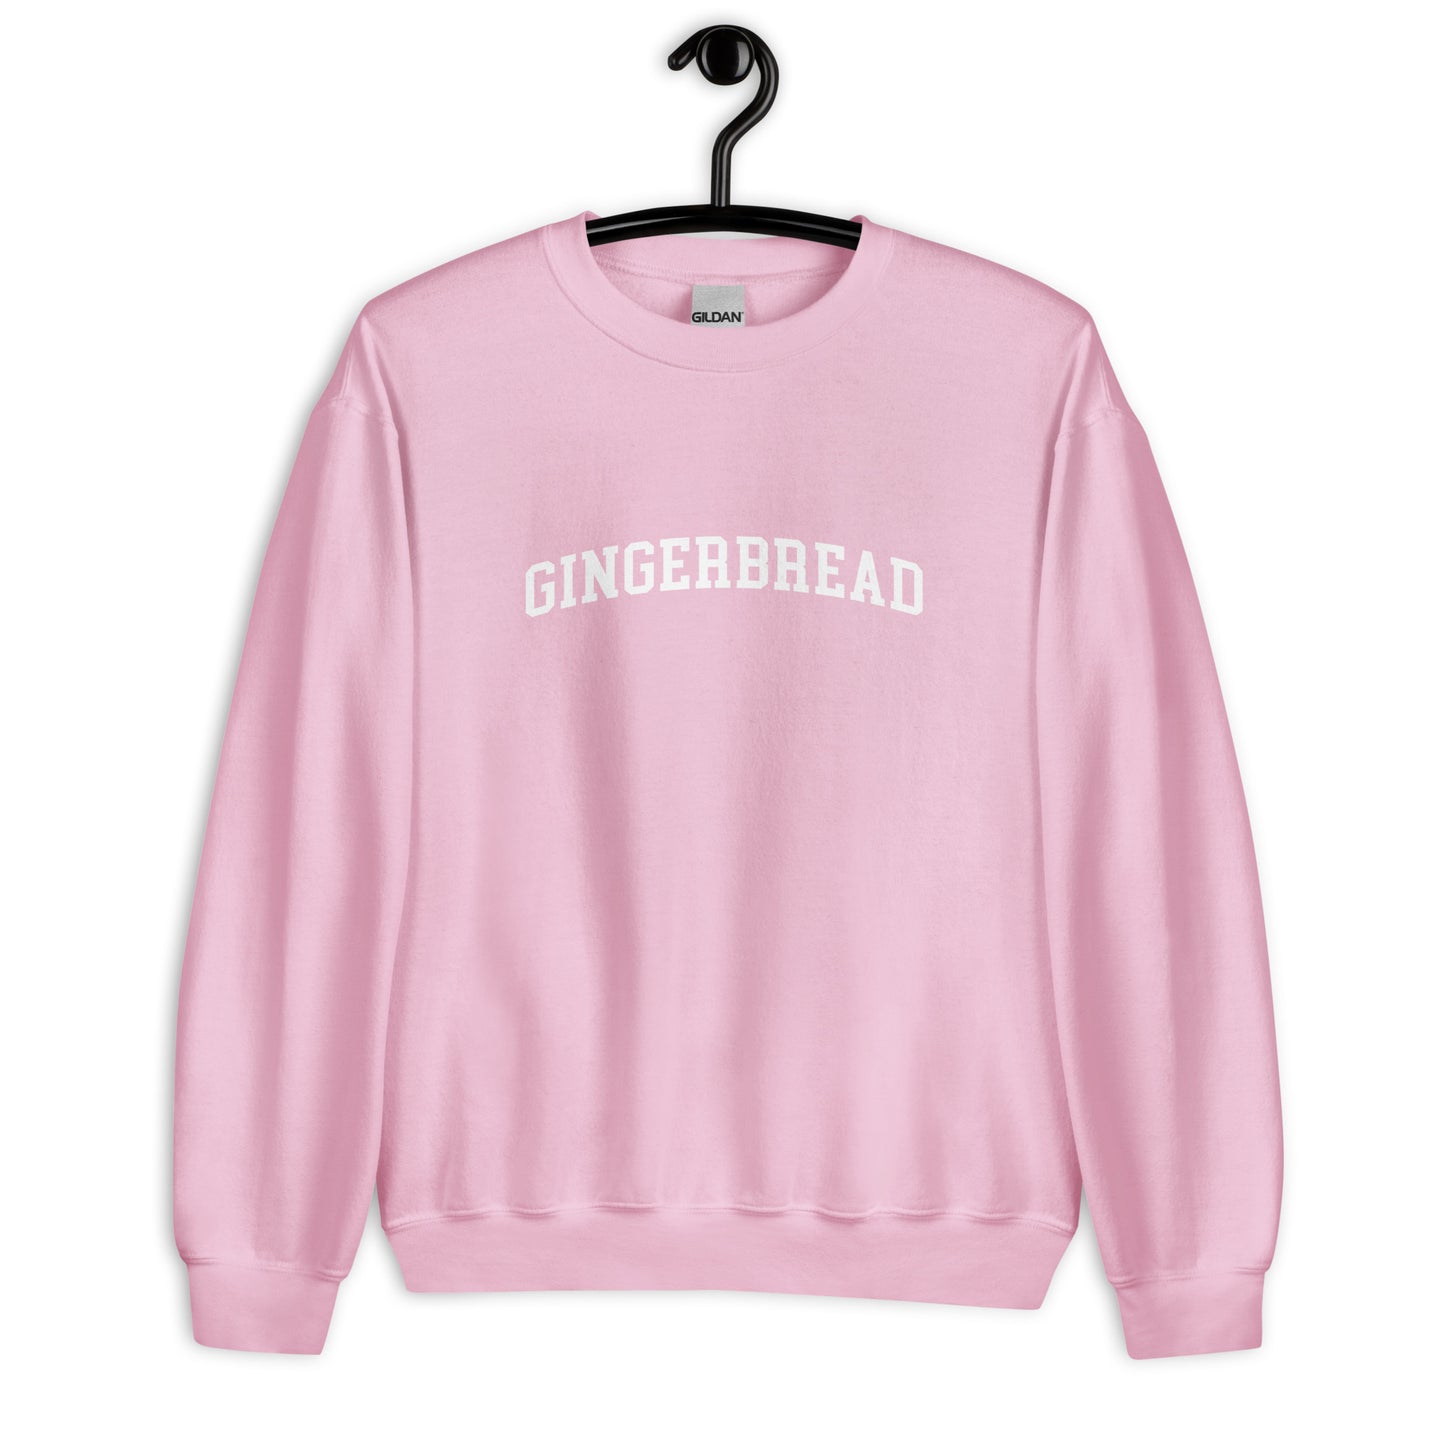 Gingerbread Sweatshirt - Arched Font